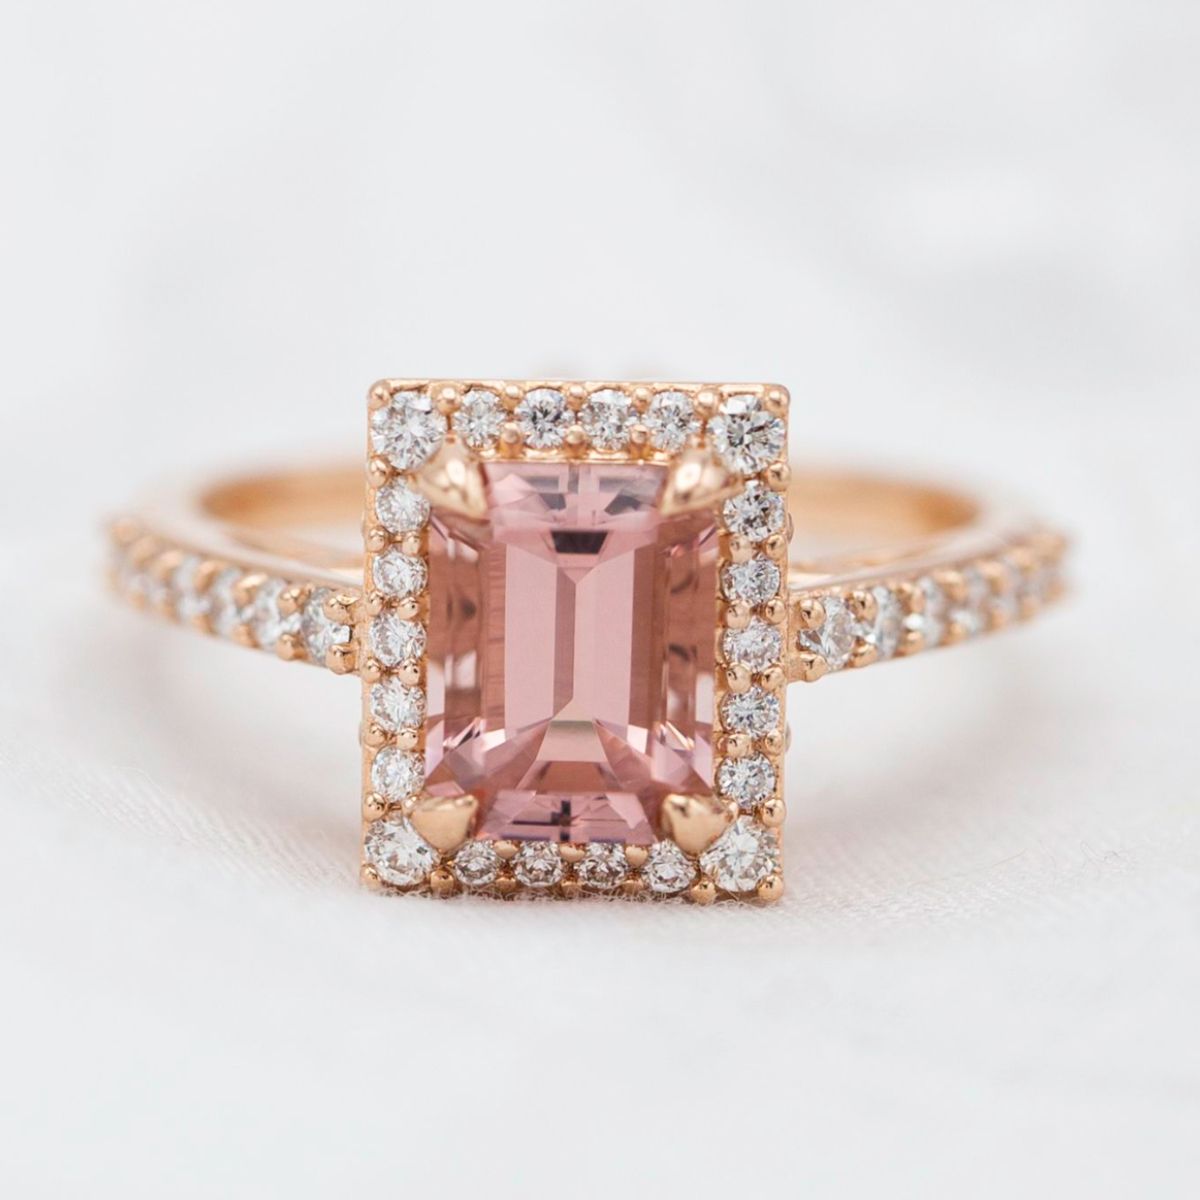 HUGE Precious Flawless 26.20 Ct Natural Pink Morganite Faceted Loose Gemstone GIT Certified Square Cut Very Rare Morganite Use Making Ring